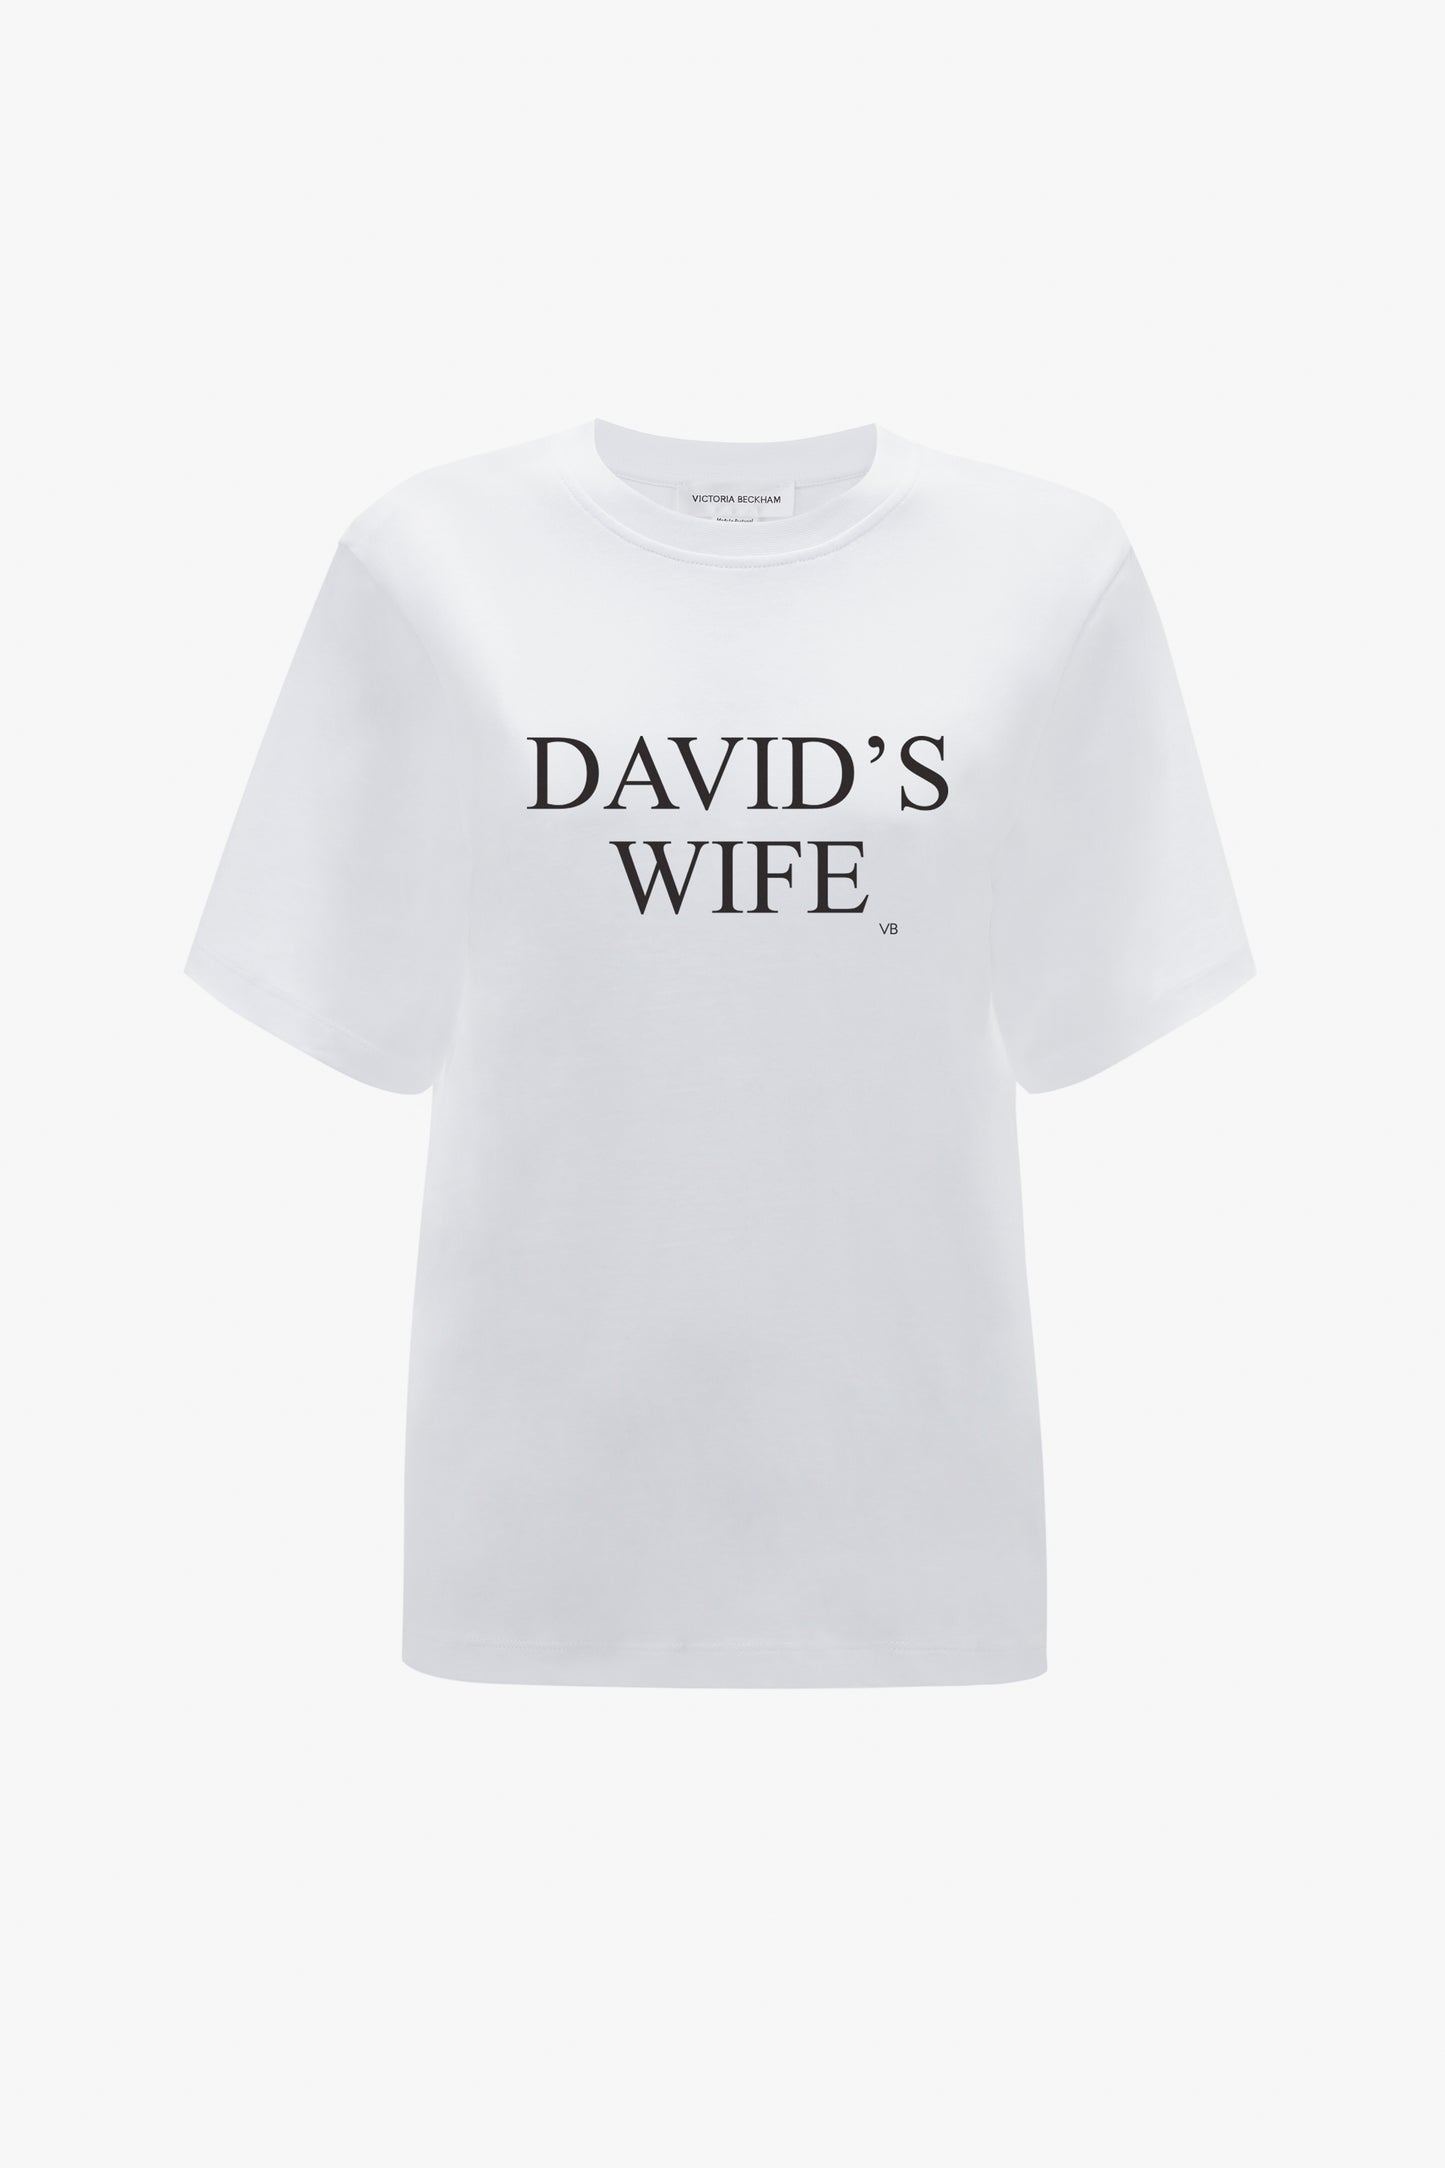 David's Wife' Slogan T-Shirt In White